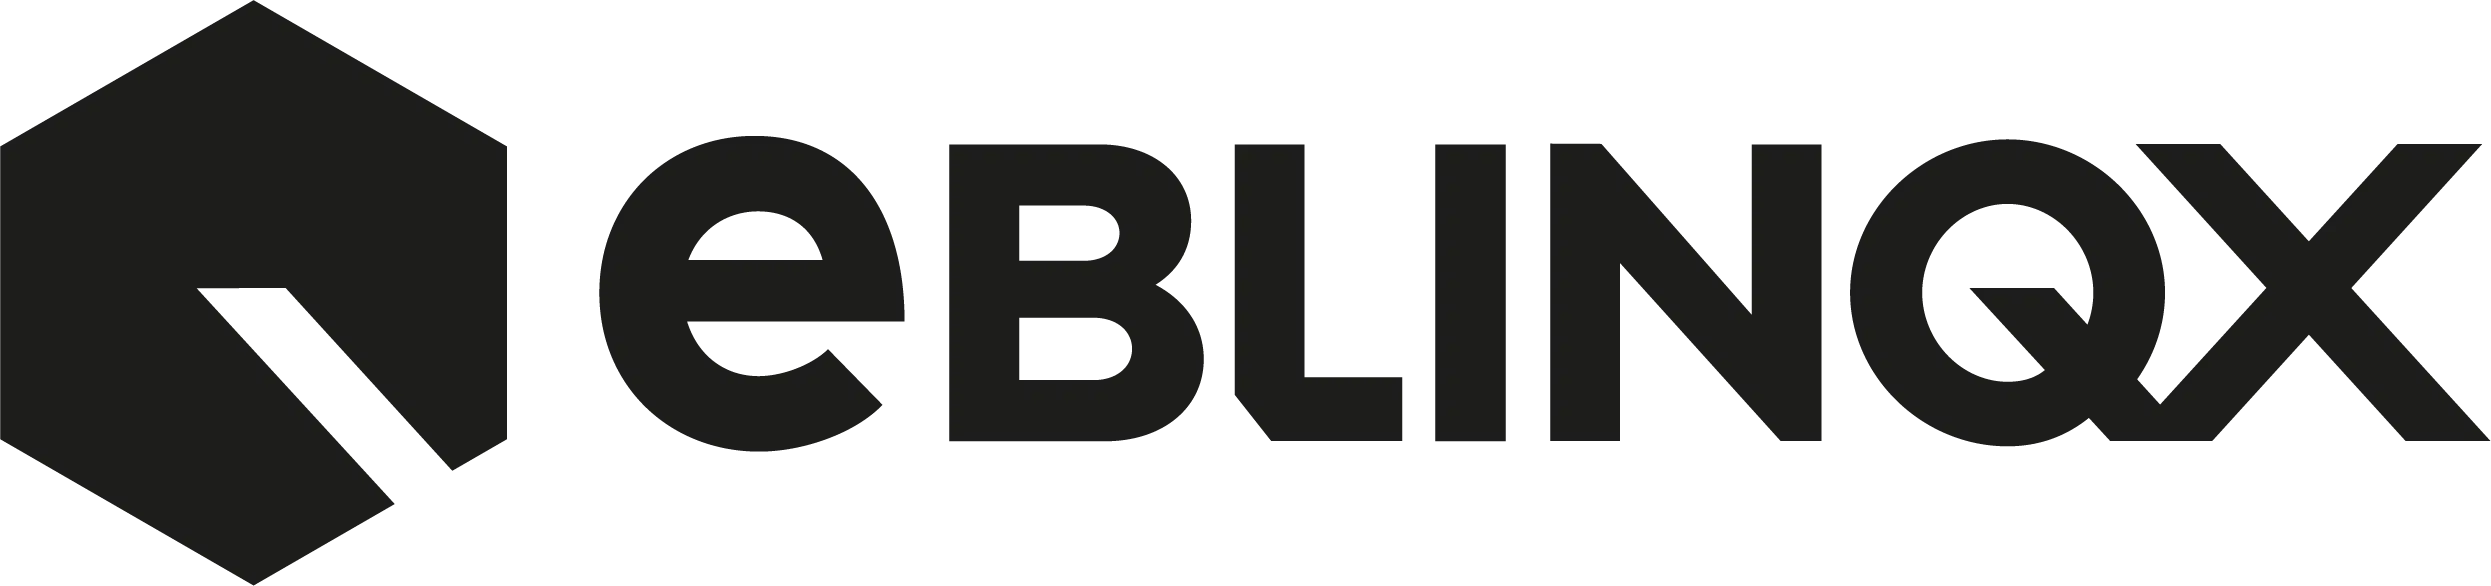 eBlinqx logo